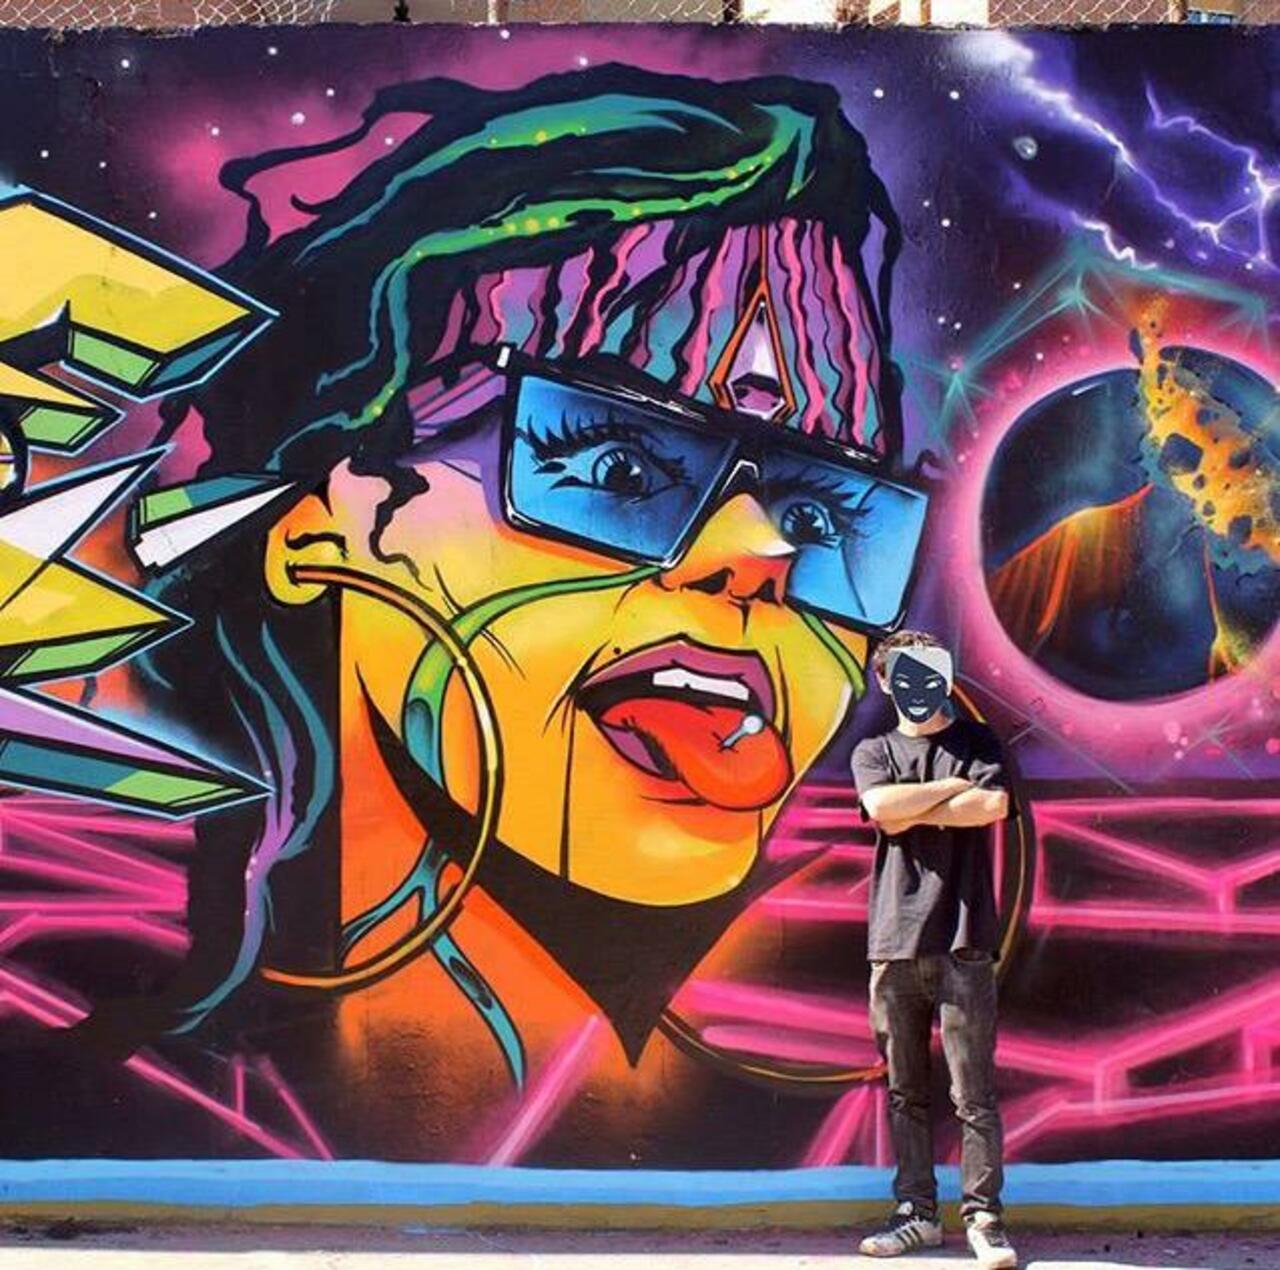 RT @12Elena27: Brilliant new Street Art by the artist Jaycaes

#art #graffiti #mural #streetart http://t.co/JFdKrIqbSC